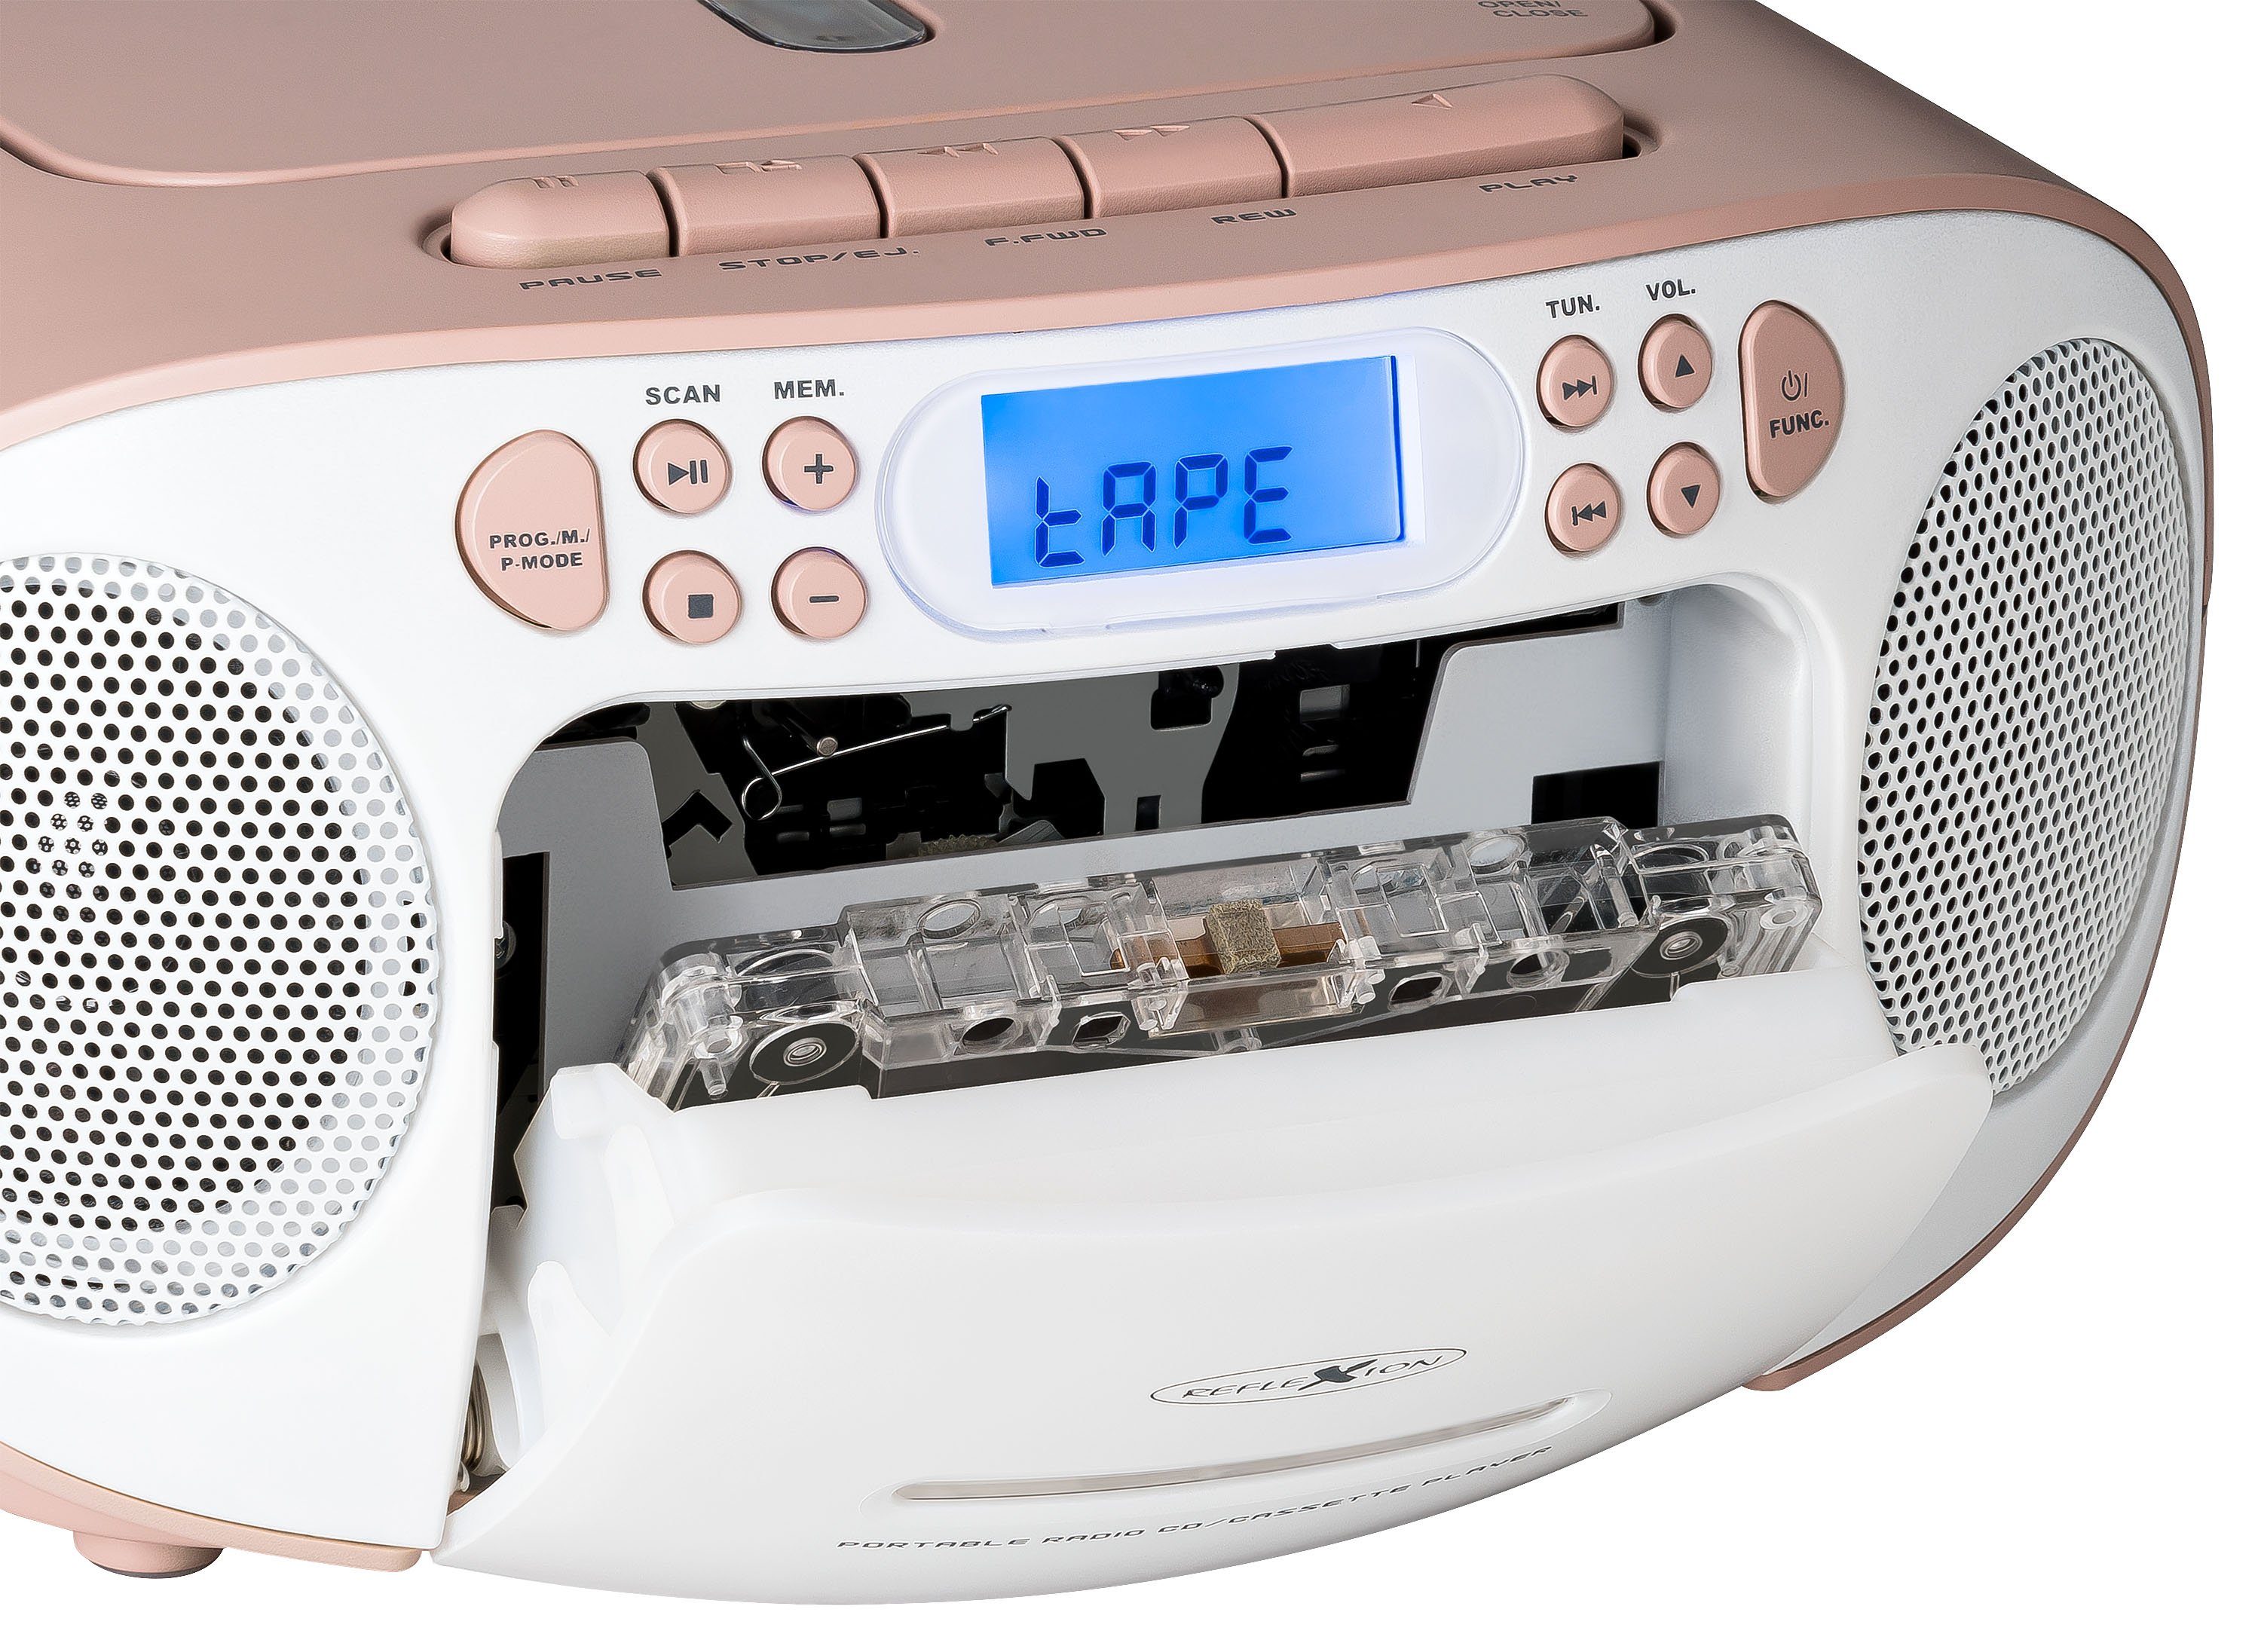 20 (UKW Stereo Tragbare Boombox LCD-Display, PLL Boombox AUX-Eingang, Radio, W, Reflexion CD/Radio/Kassette, weiß/pink Kopfhörer-Anschluss) RCR2260